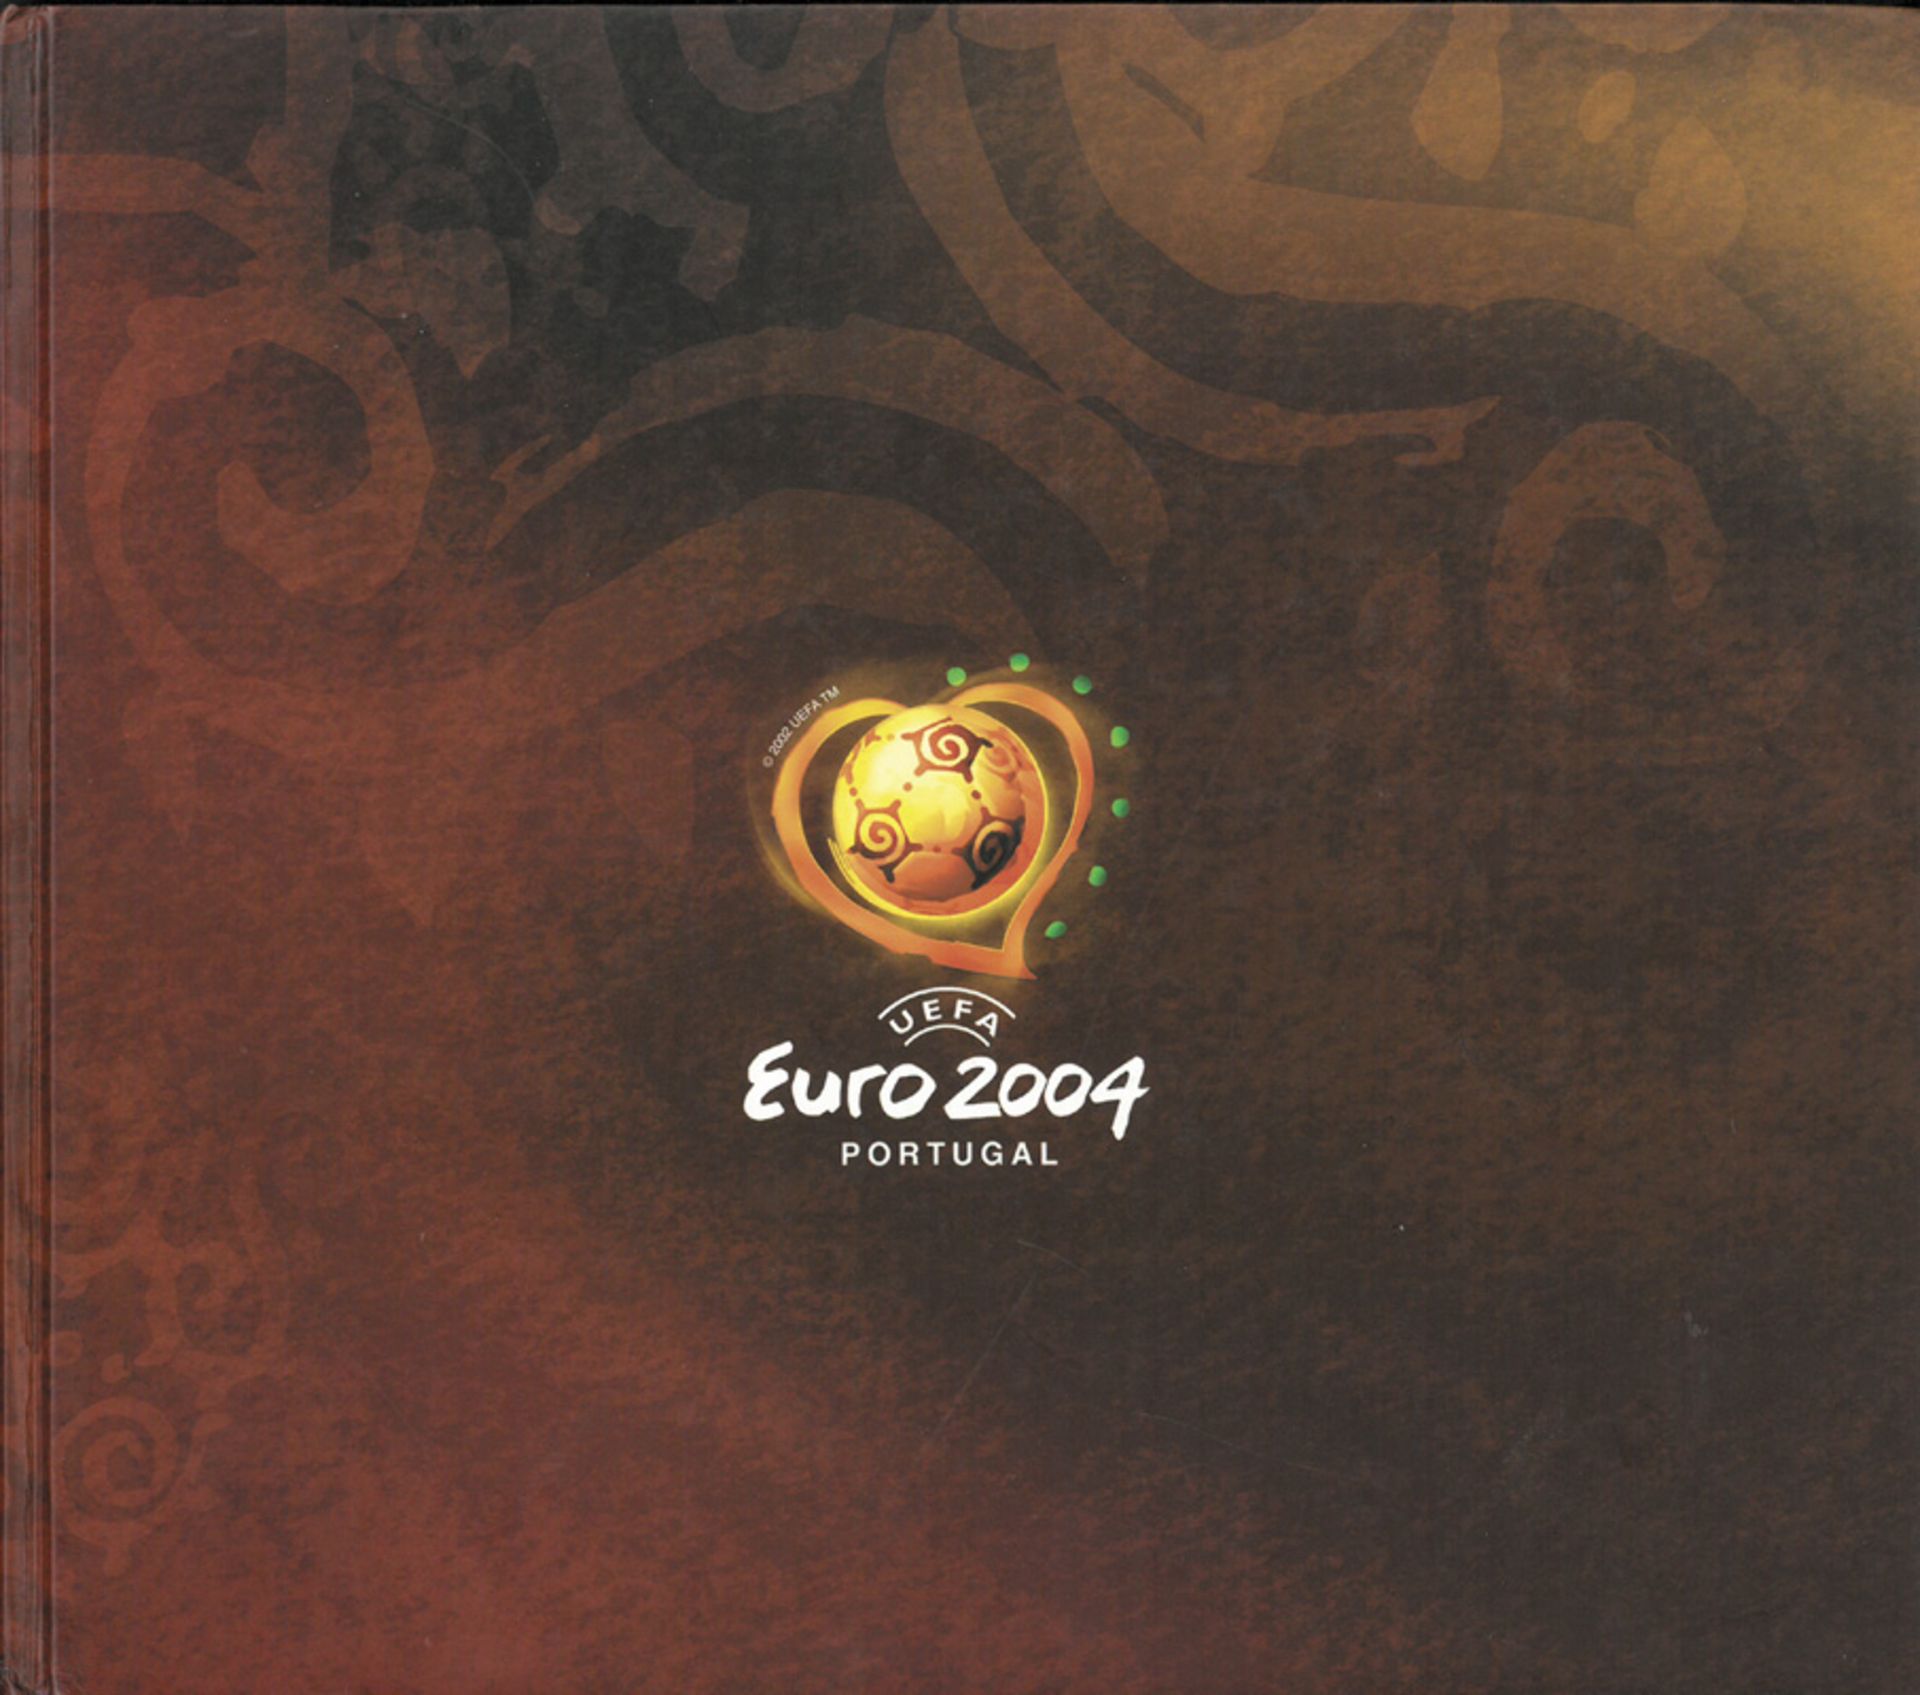 Ahlstrom - UEFA EURO 2004 Portugal. - Offizieller Bericht der UEFA zur Fußball-Europameisterschaft